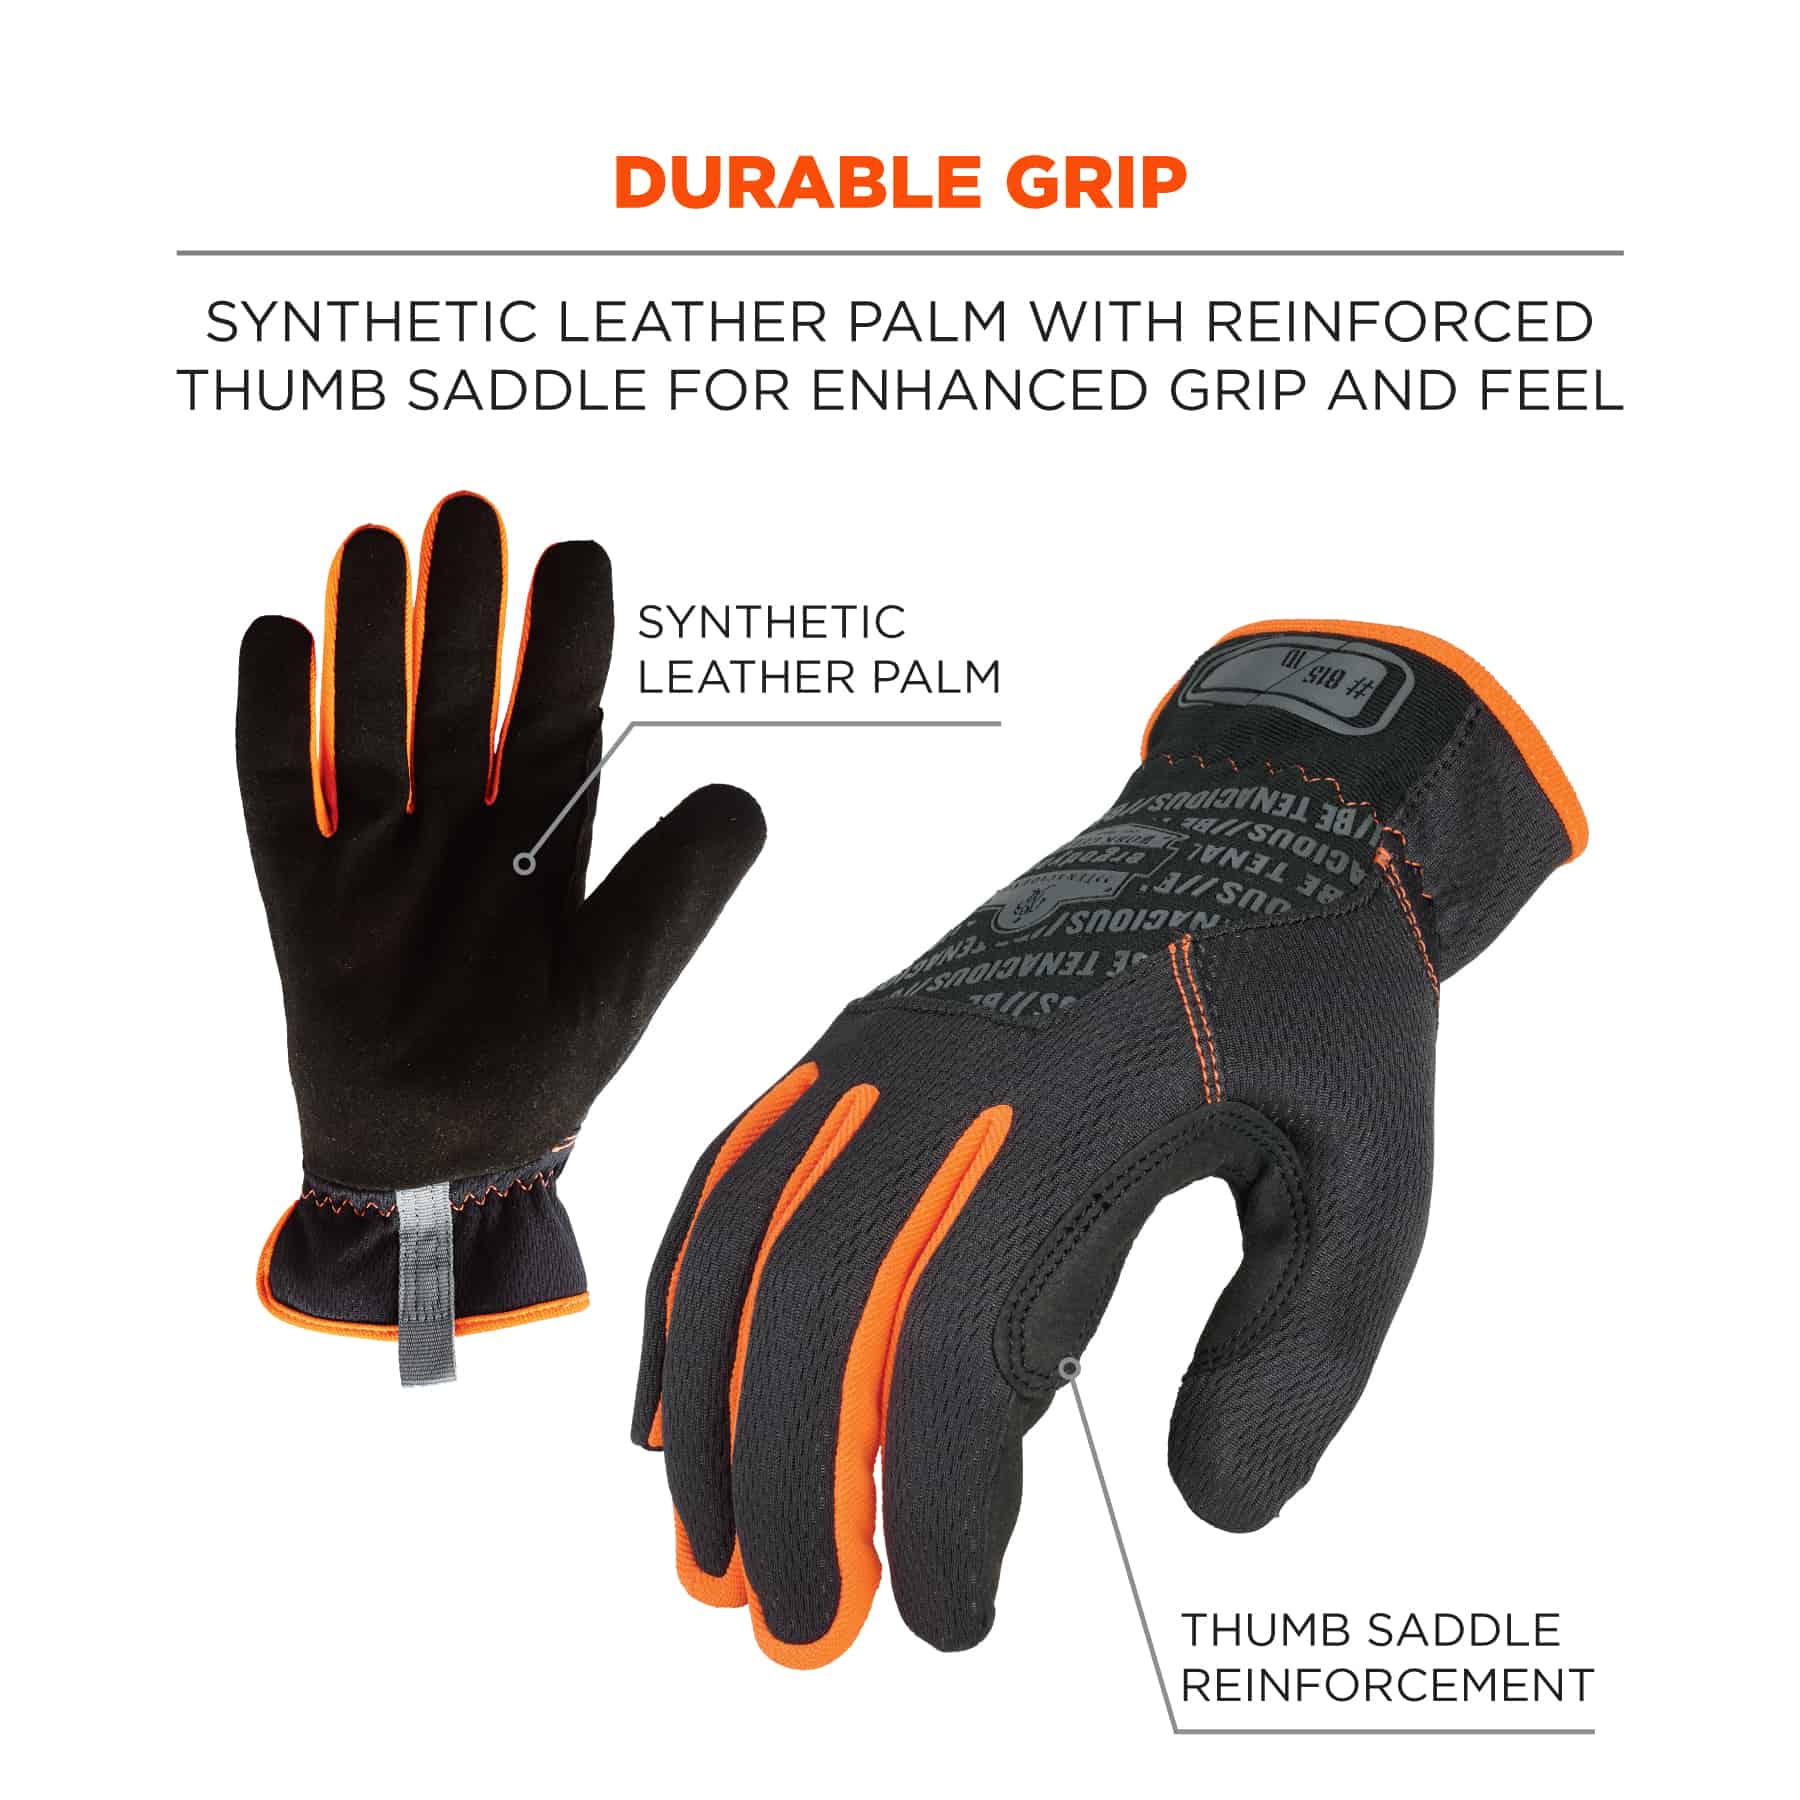 https://www.ergodyne.com/sites/default/files/product-images/17202-815-quickcuff-utility-gloves-durable-grip.jpg